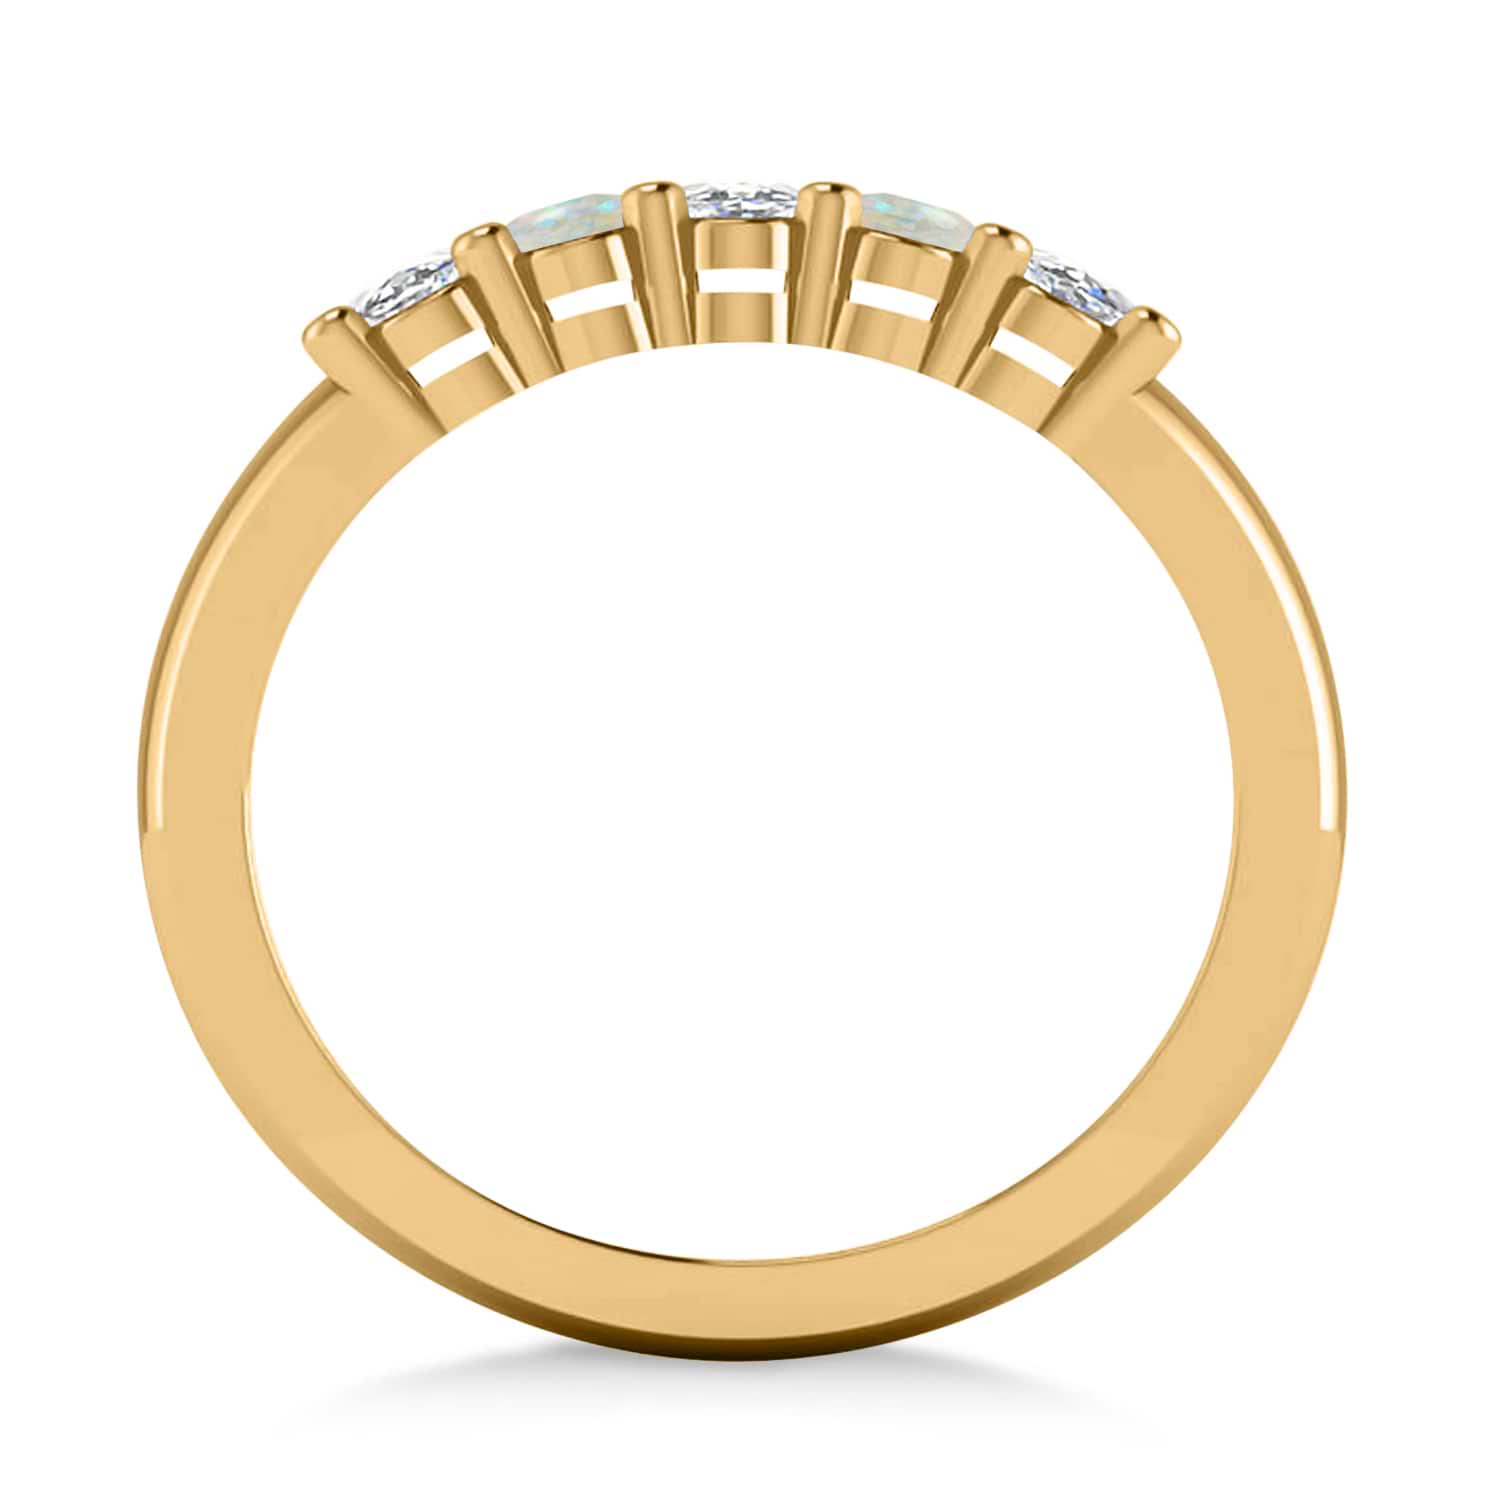 Oval Diamond & Opal Five Stone Ring 14k Yellow Gold (1.00ct)